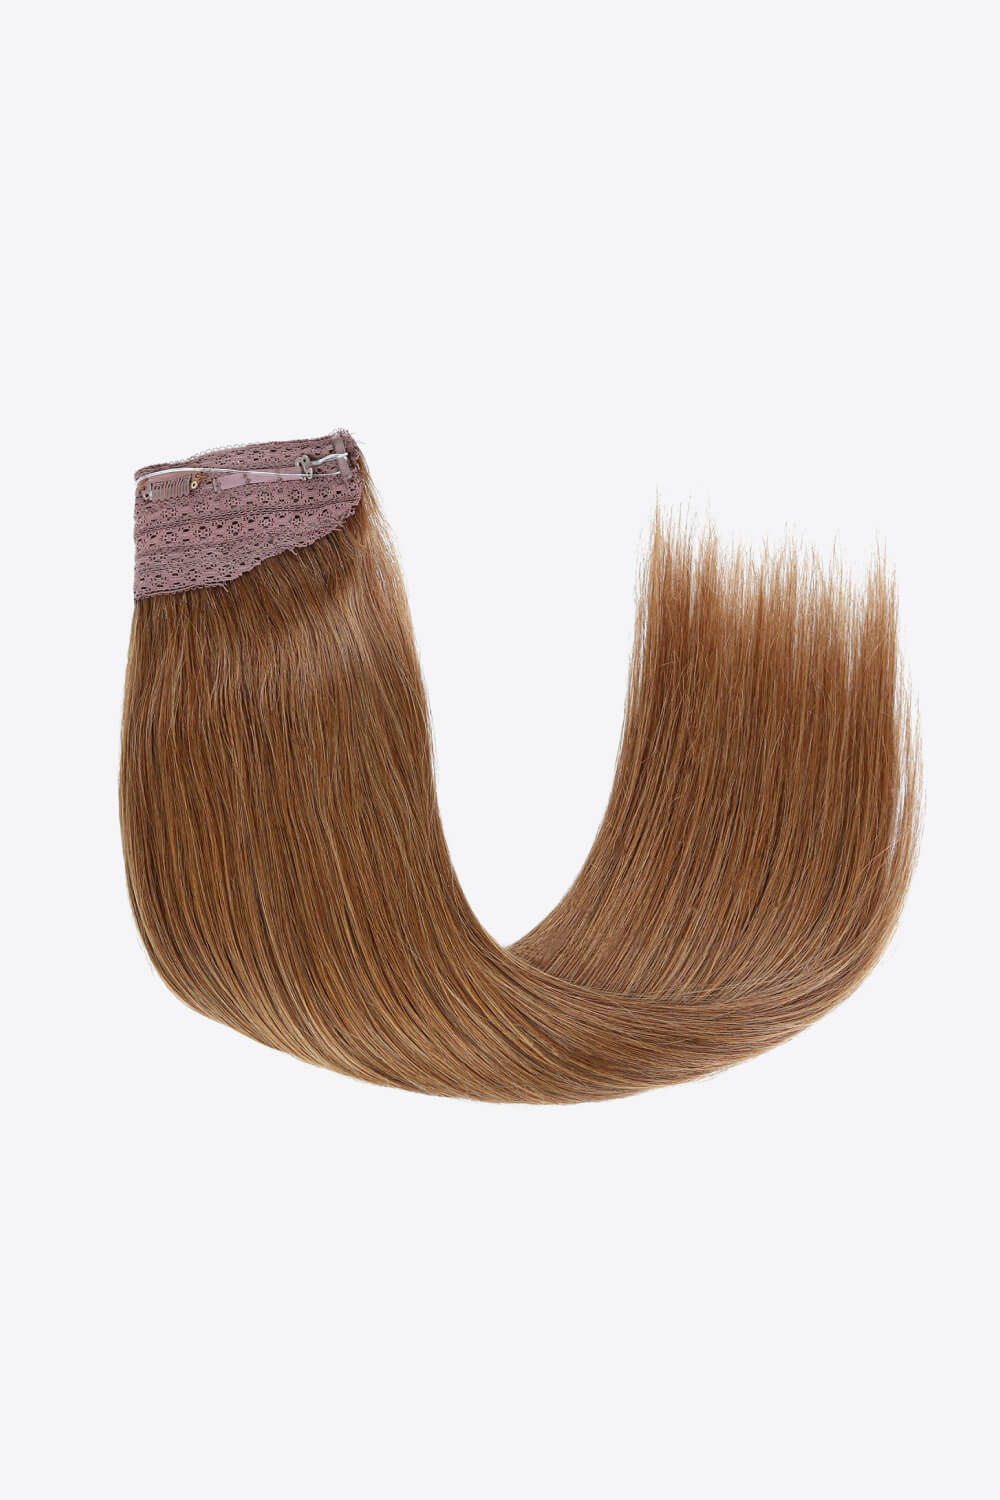 18" 80g Long Straight Indian Human Halo Hair